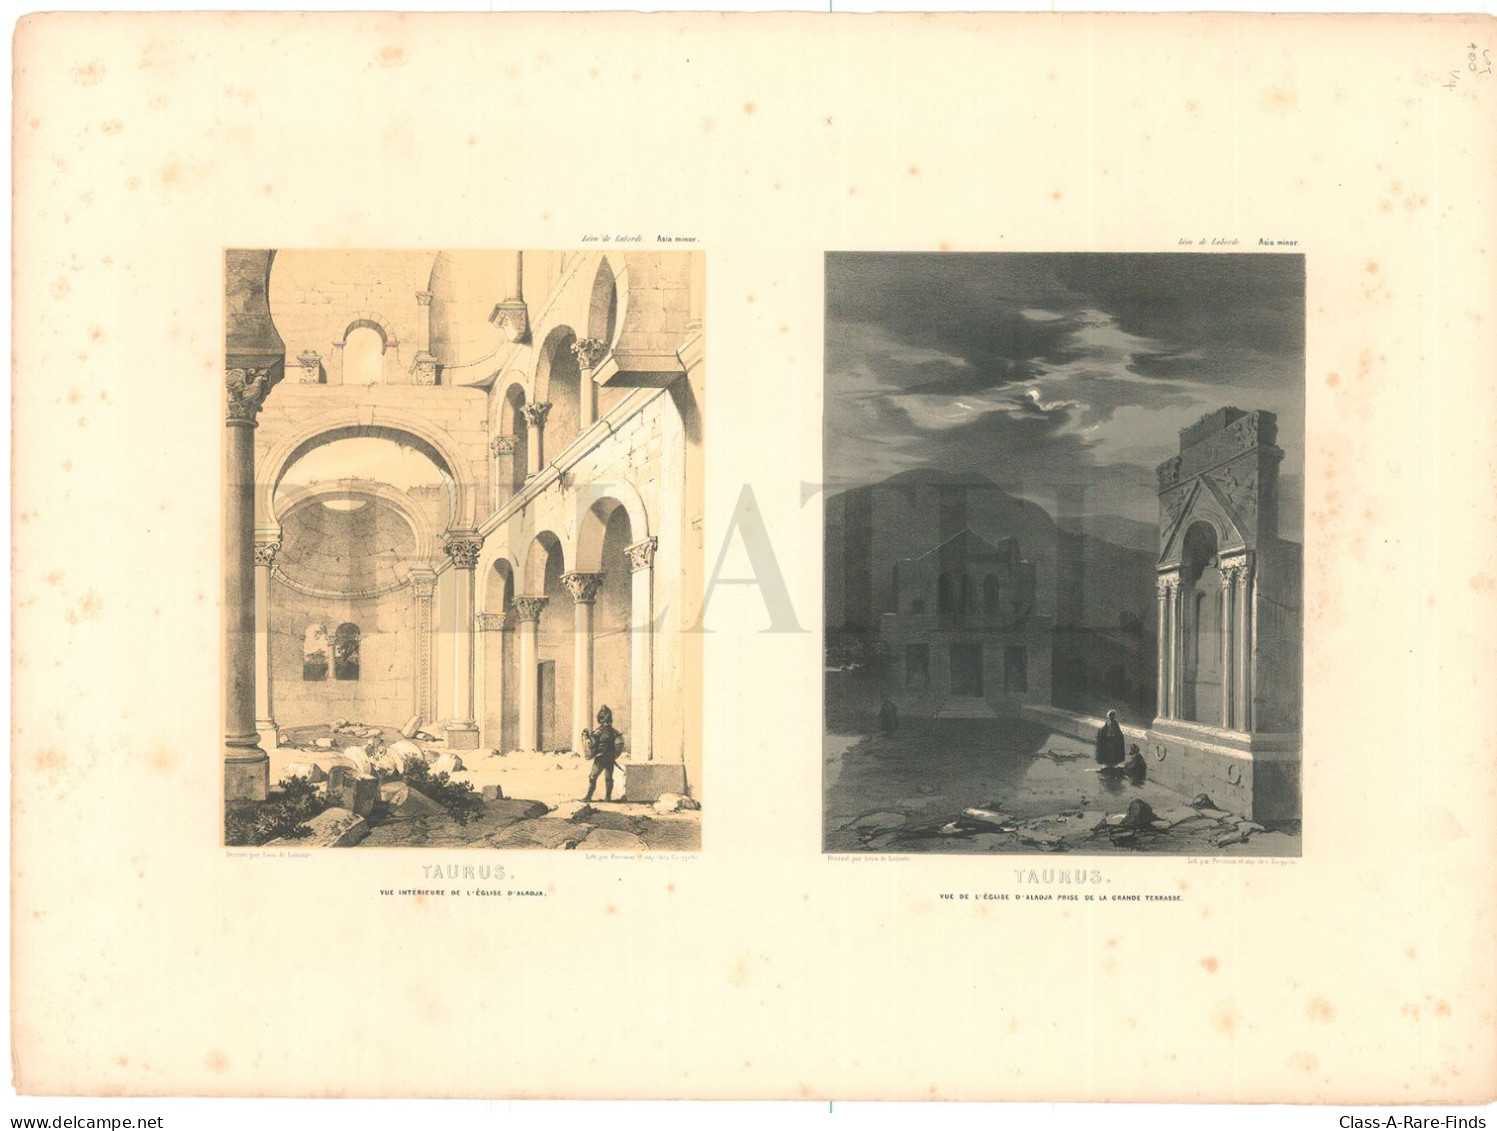 1838, LABORDE: "VOYAGE DE L'ASIE MINEURE" LITOGRAPH PLATE #69. ARCHAEOLOGY / TURKEY / ANATOLIA / SIVAS / ALACA - Archeologia